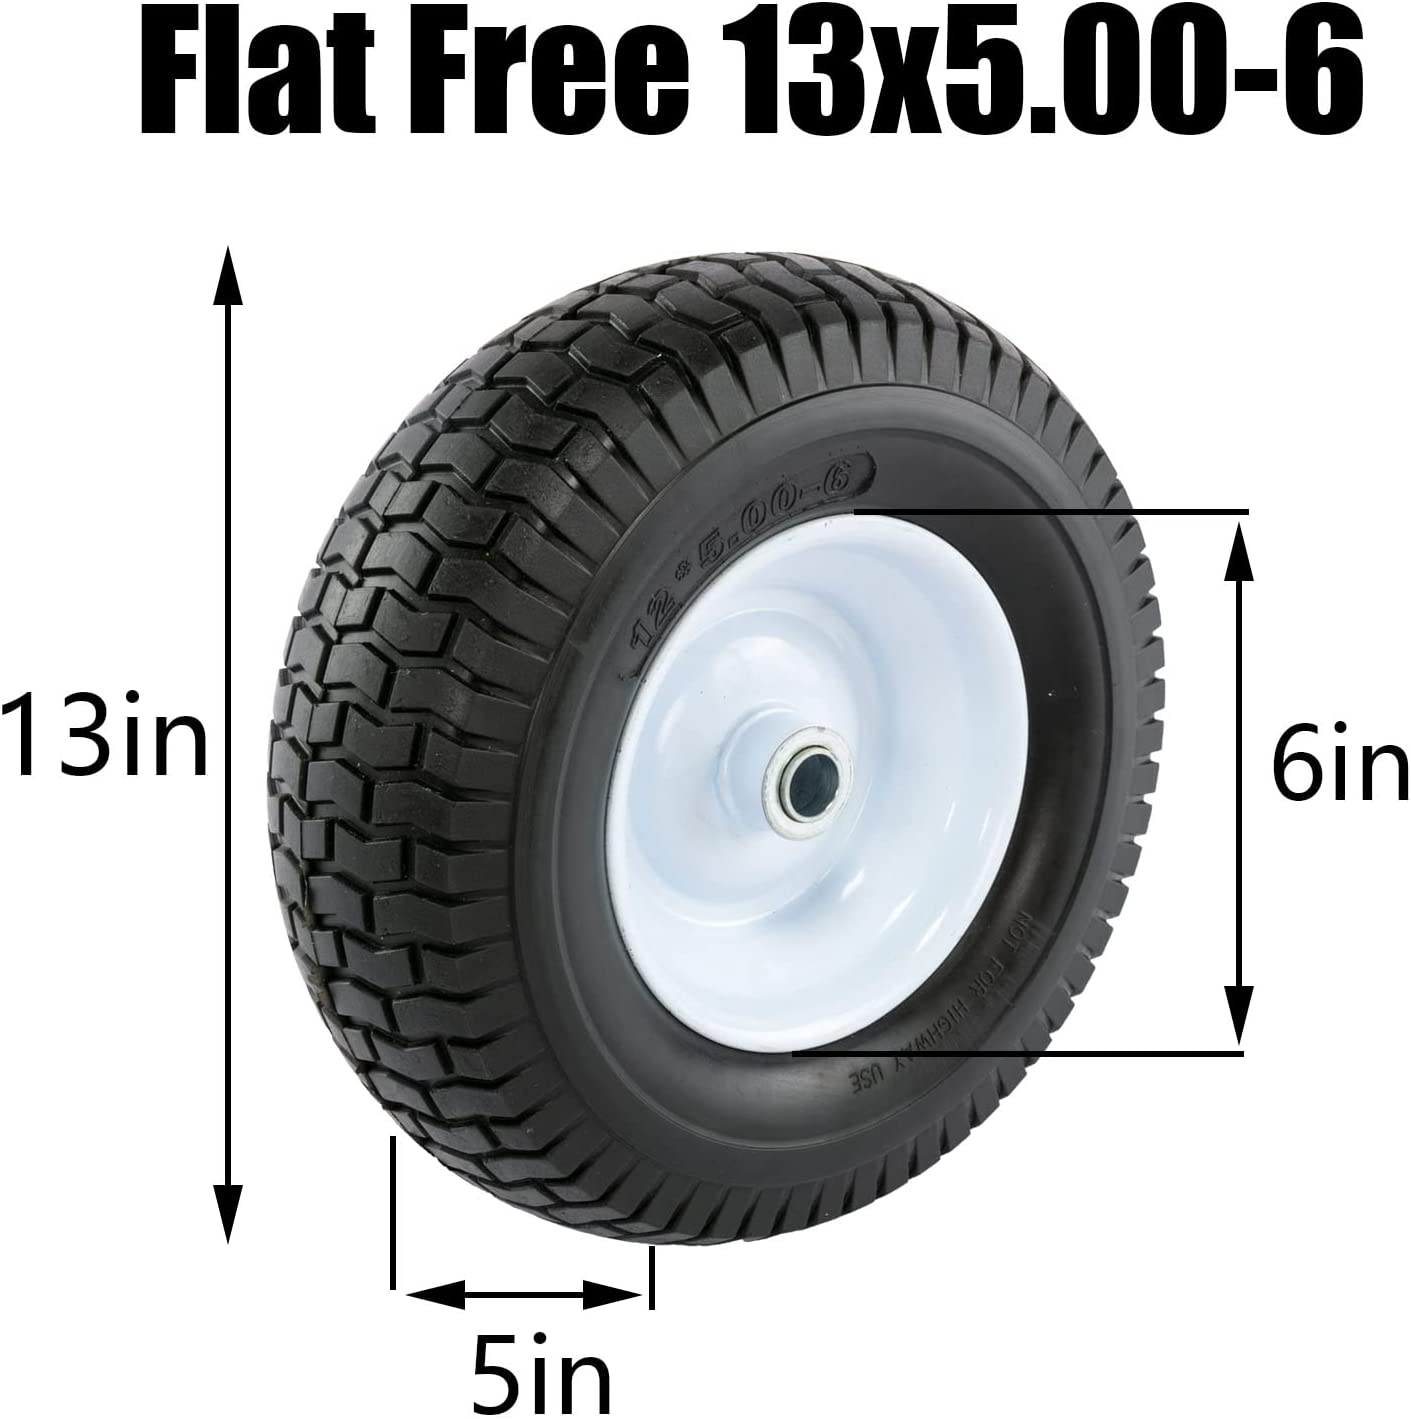 Flat Free Lawn Mower Tire 13x5.00-6, 3/4 & 5/8 Bearings, 3" Hub - RelaxHome